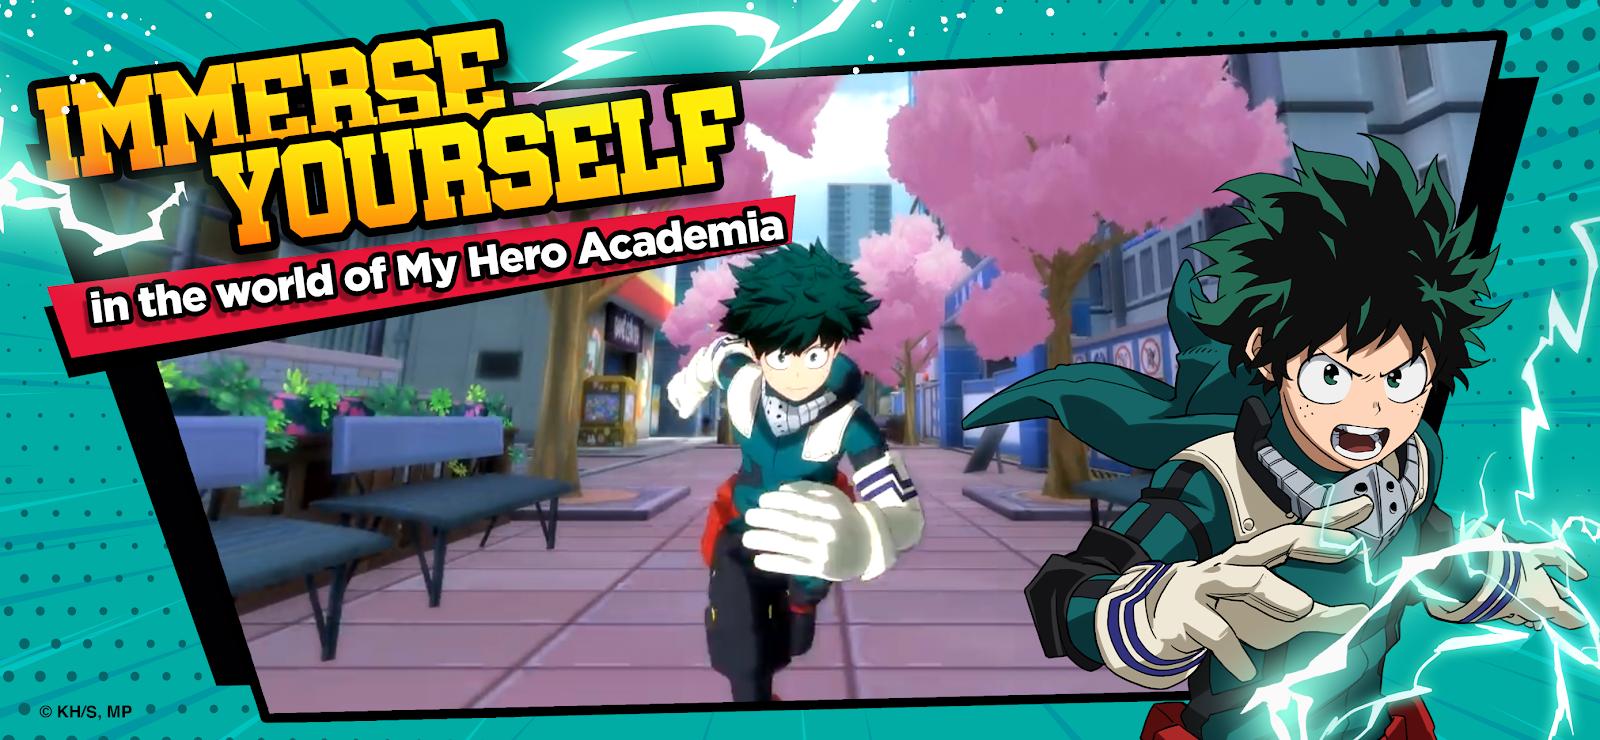 Baixe My Hero Academia: The Strongest Hero Anime RPG no PC com MEmu